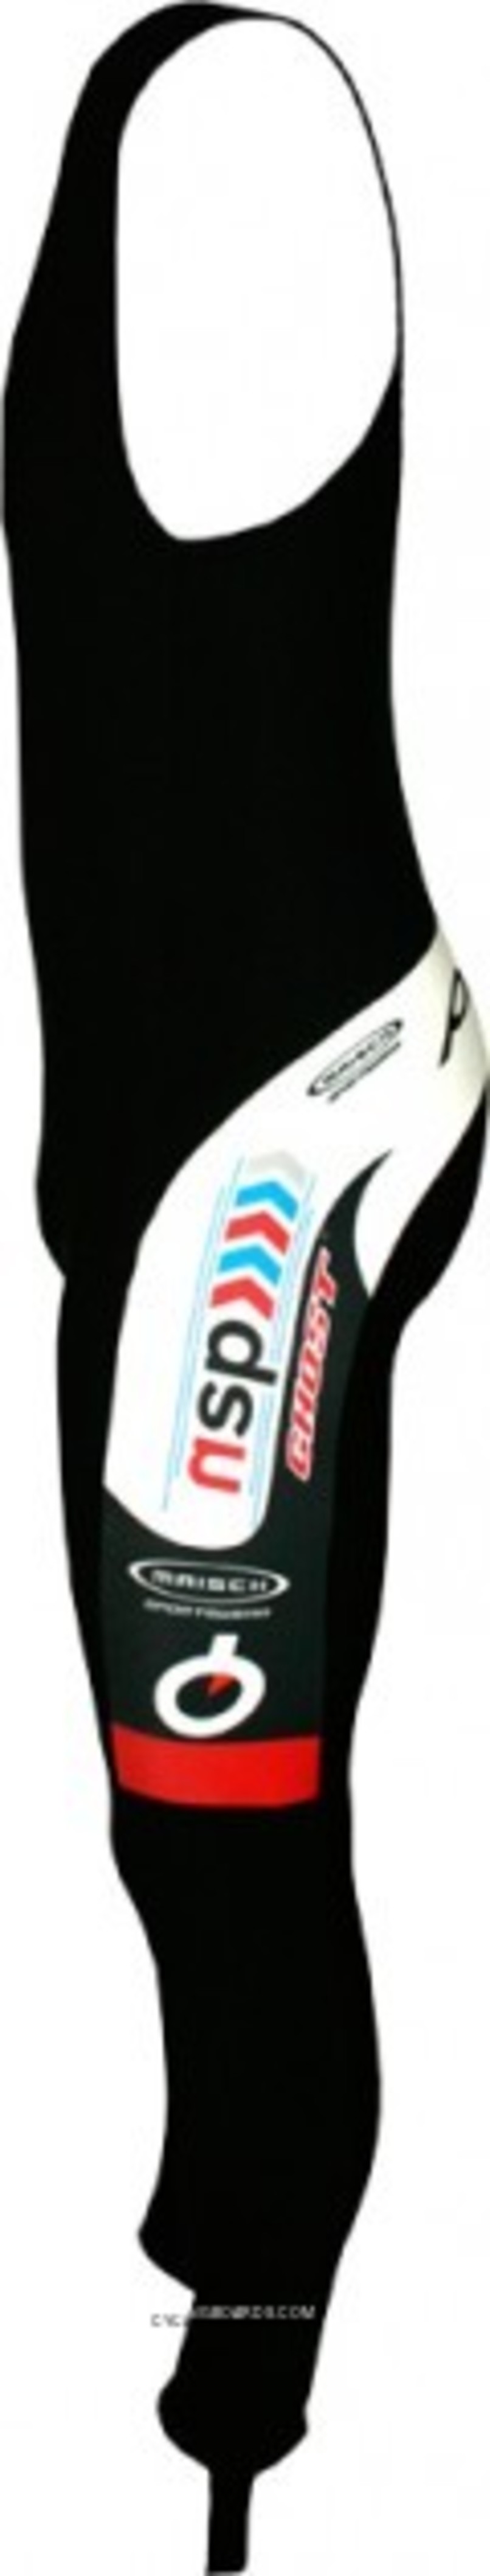 Super Deals Nsp-Ghost 2012 Maisch Radsport-Profi-Team Winter Fleece Bib Tights Tj-210-6847